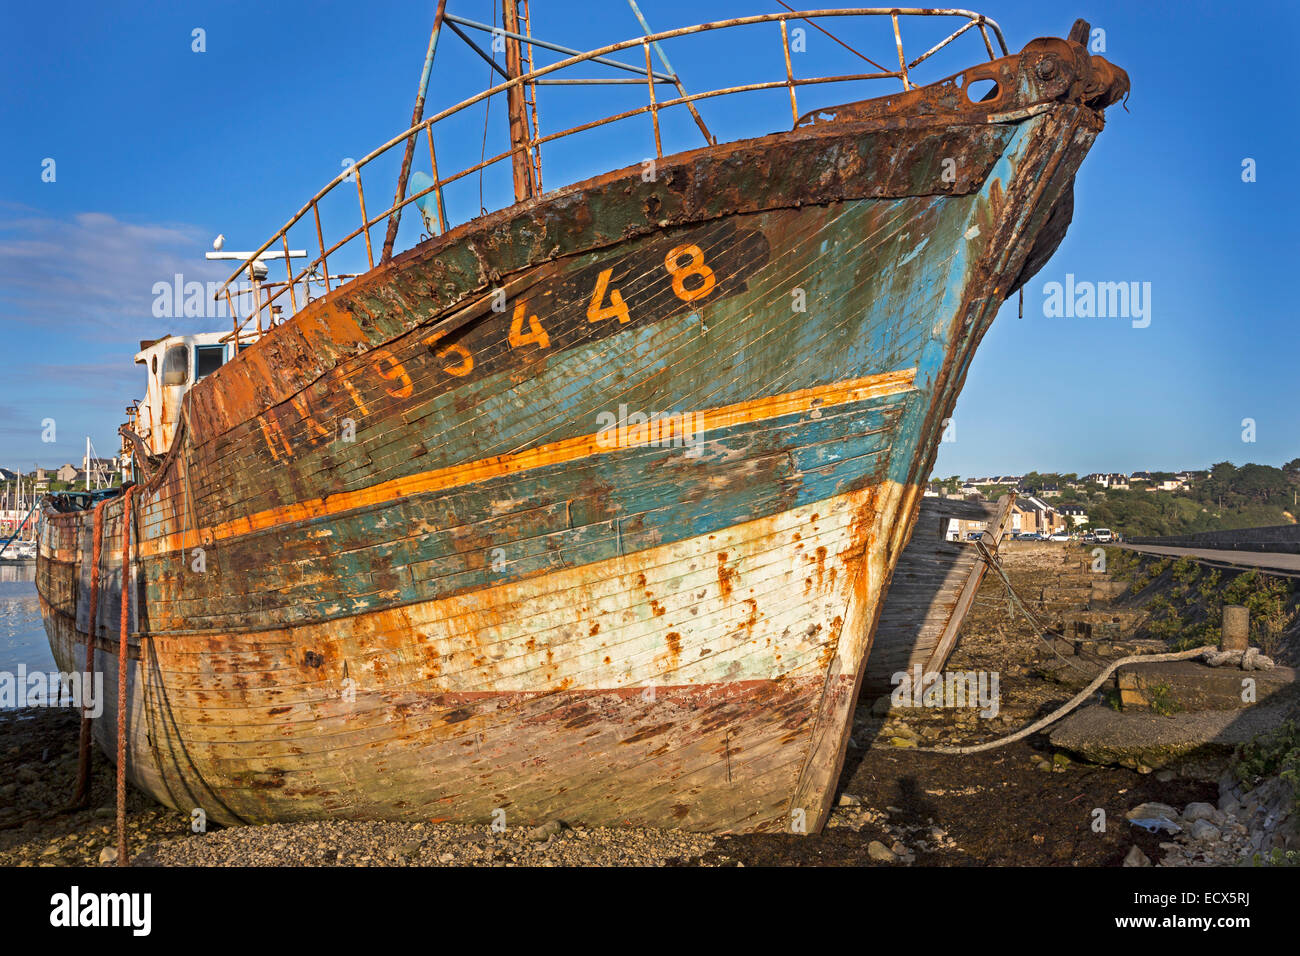 Wreck of an old fishing boat, ship graveyard, Camaret-sur-Mer, Département Finistère, Brittany, France, Europe Stock Photo